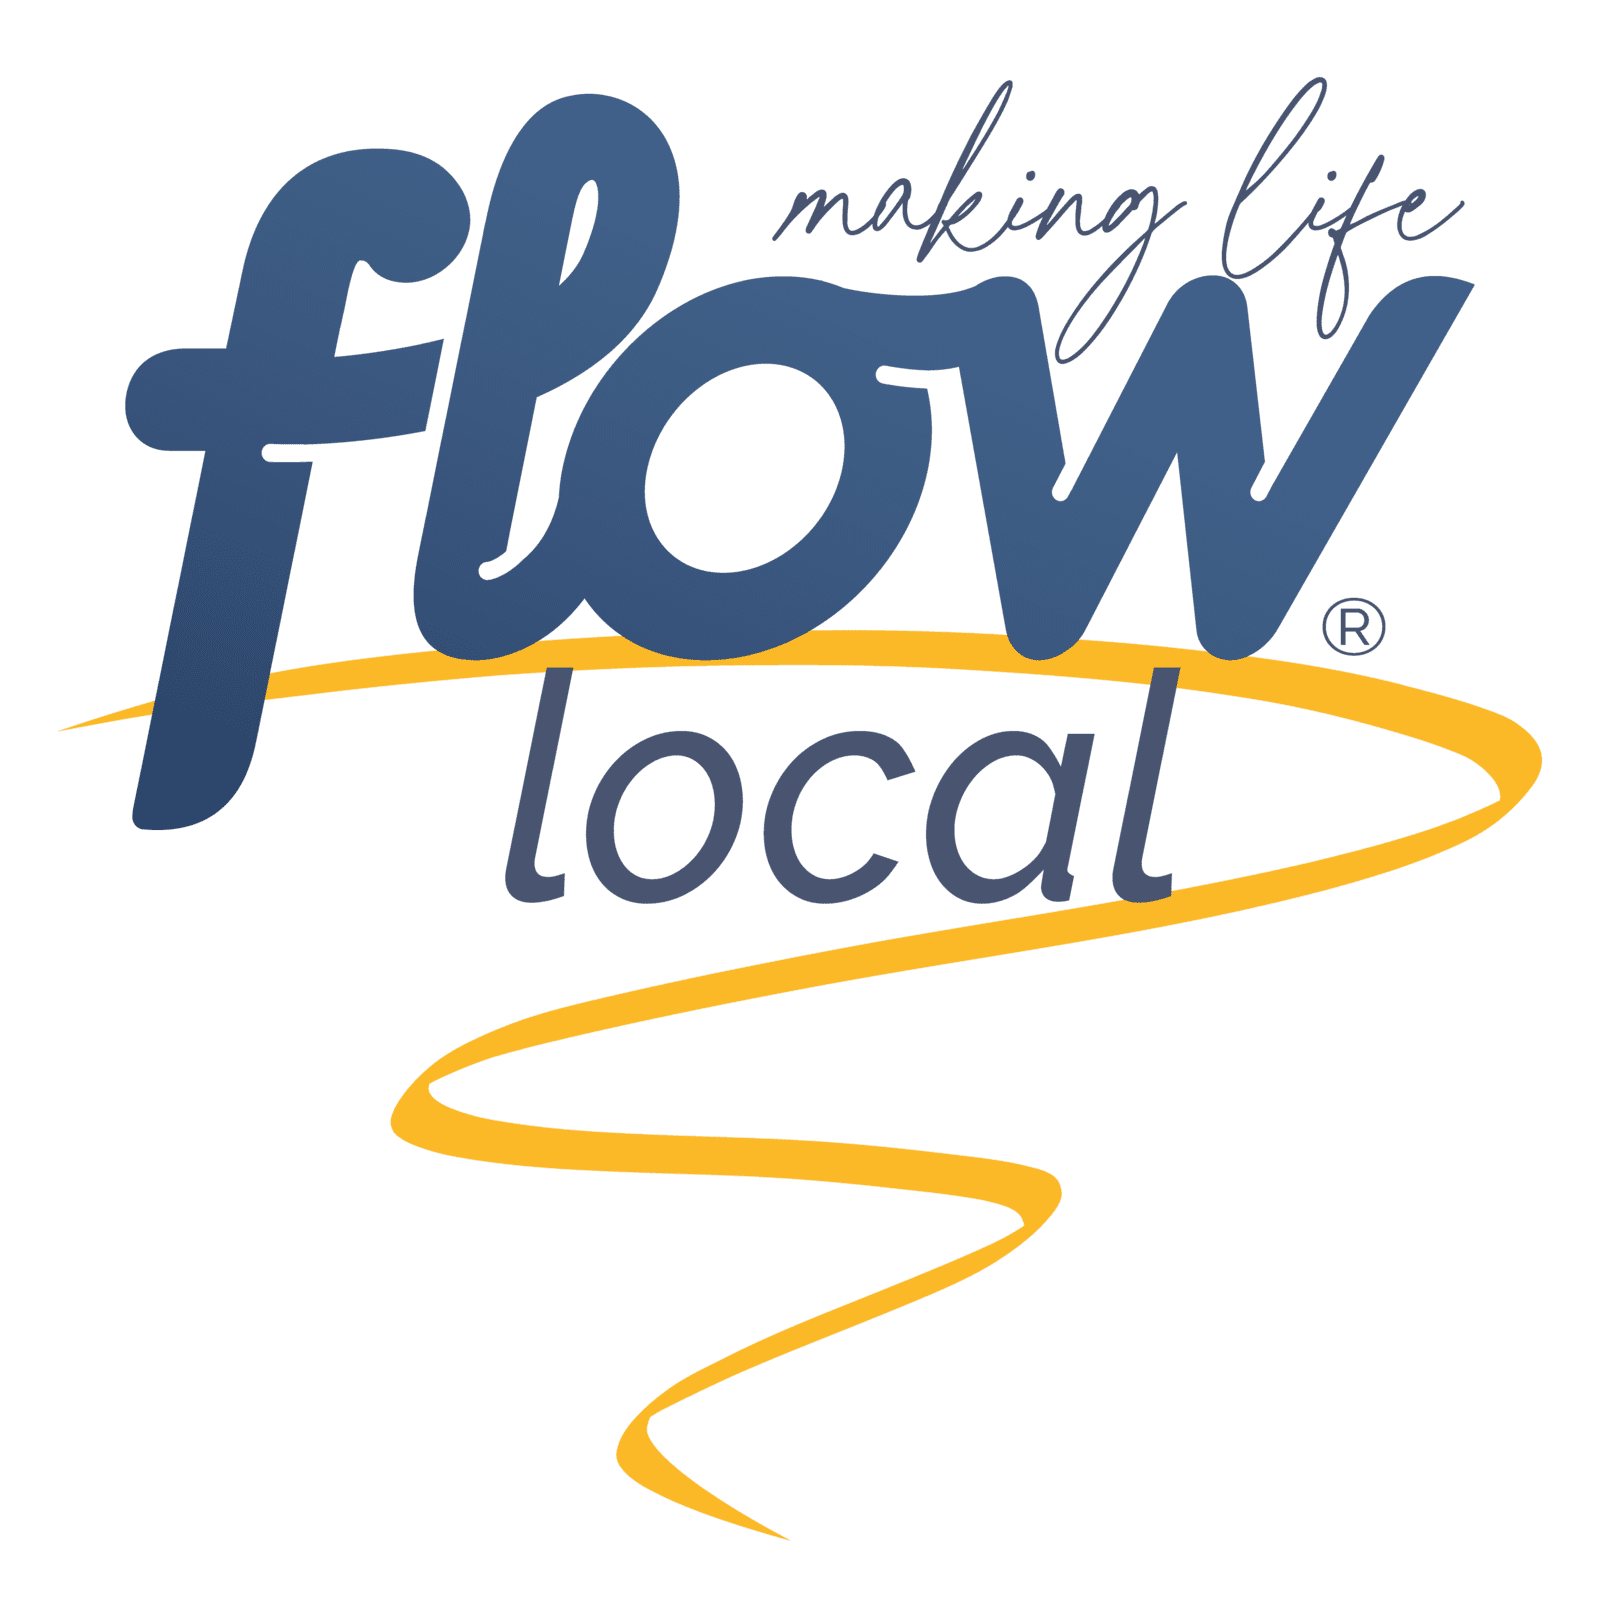 Flow Local